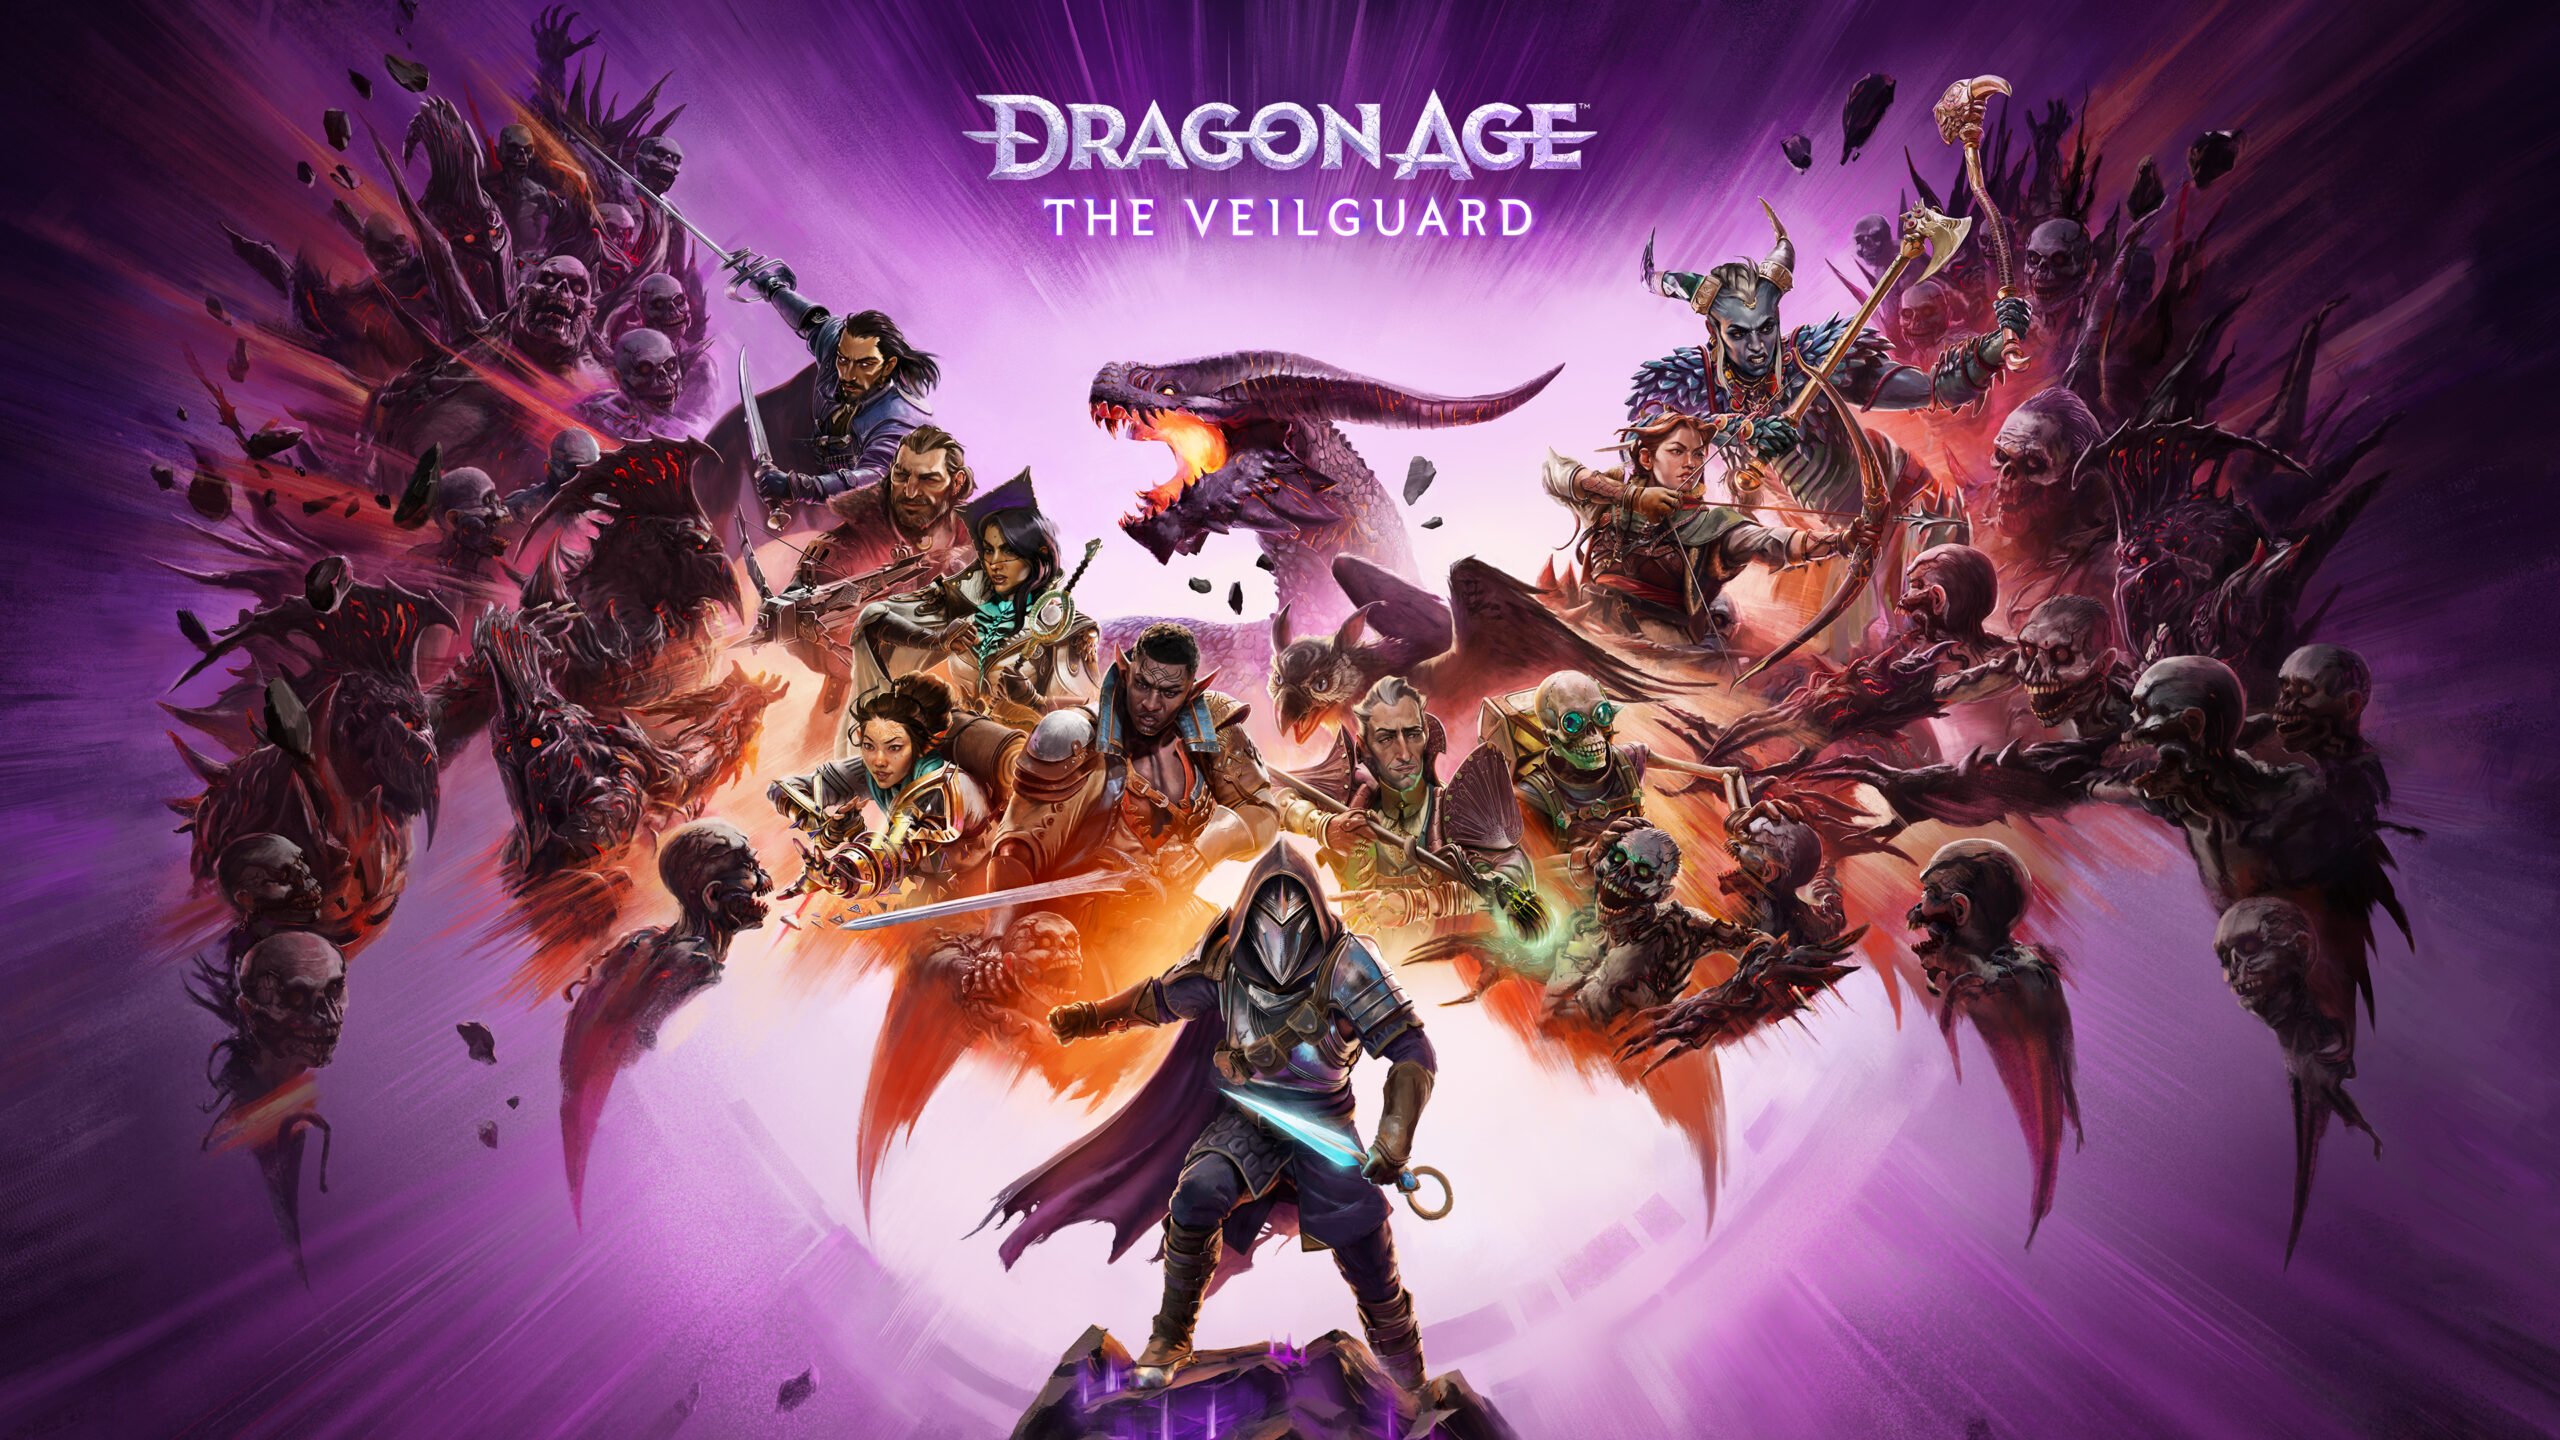 Dragon Age 4 The Veilguard